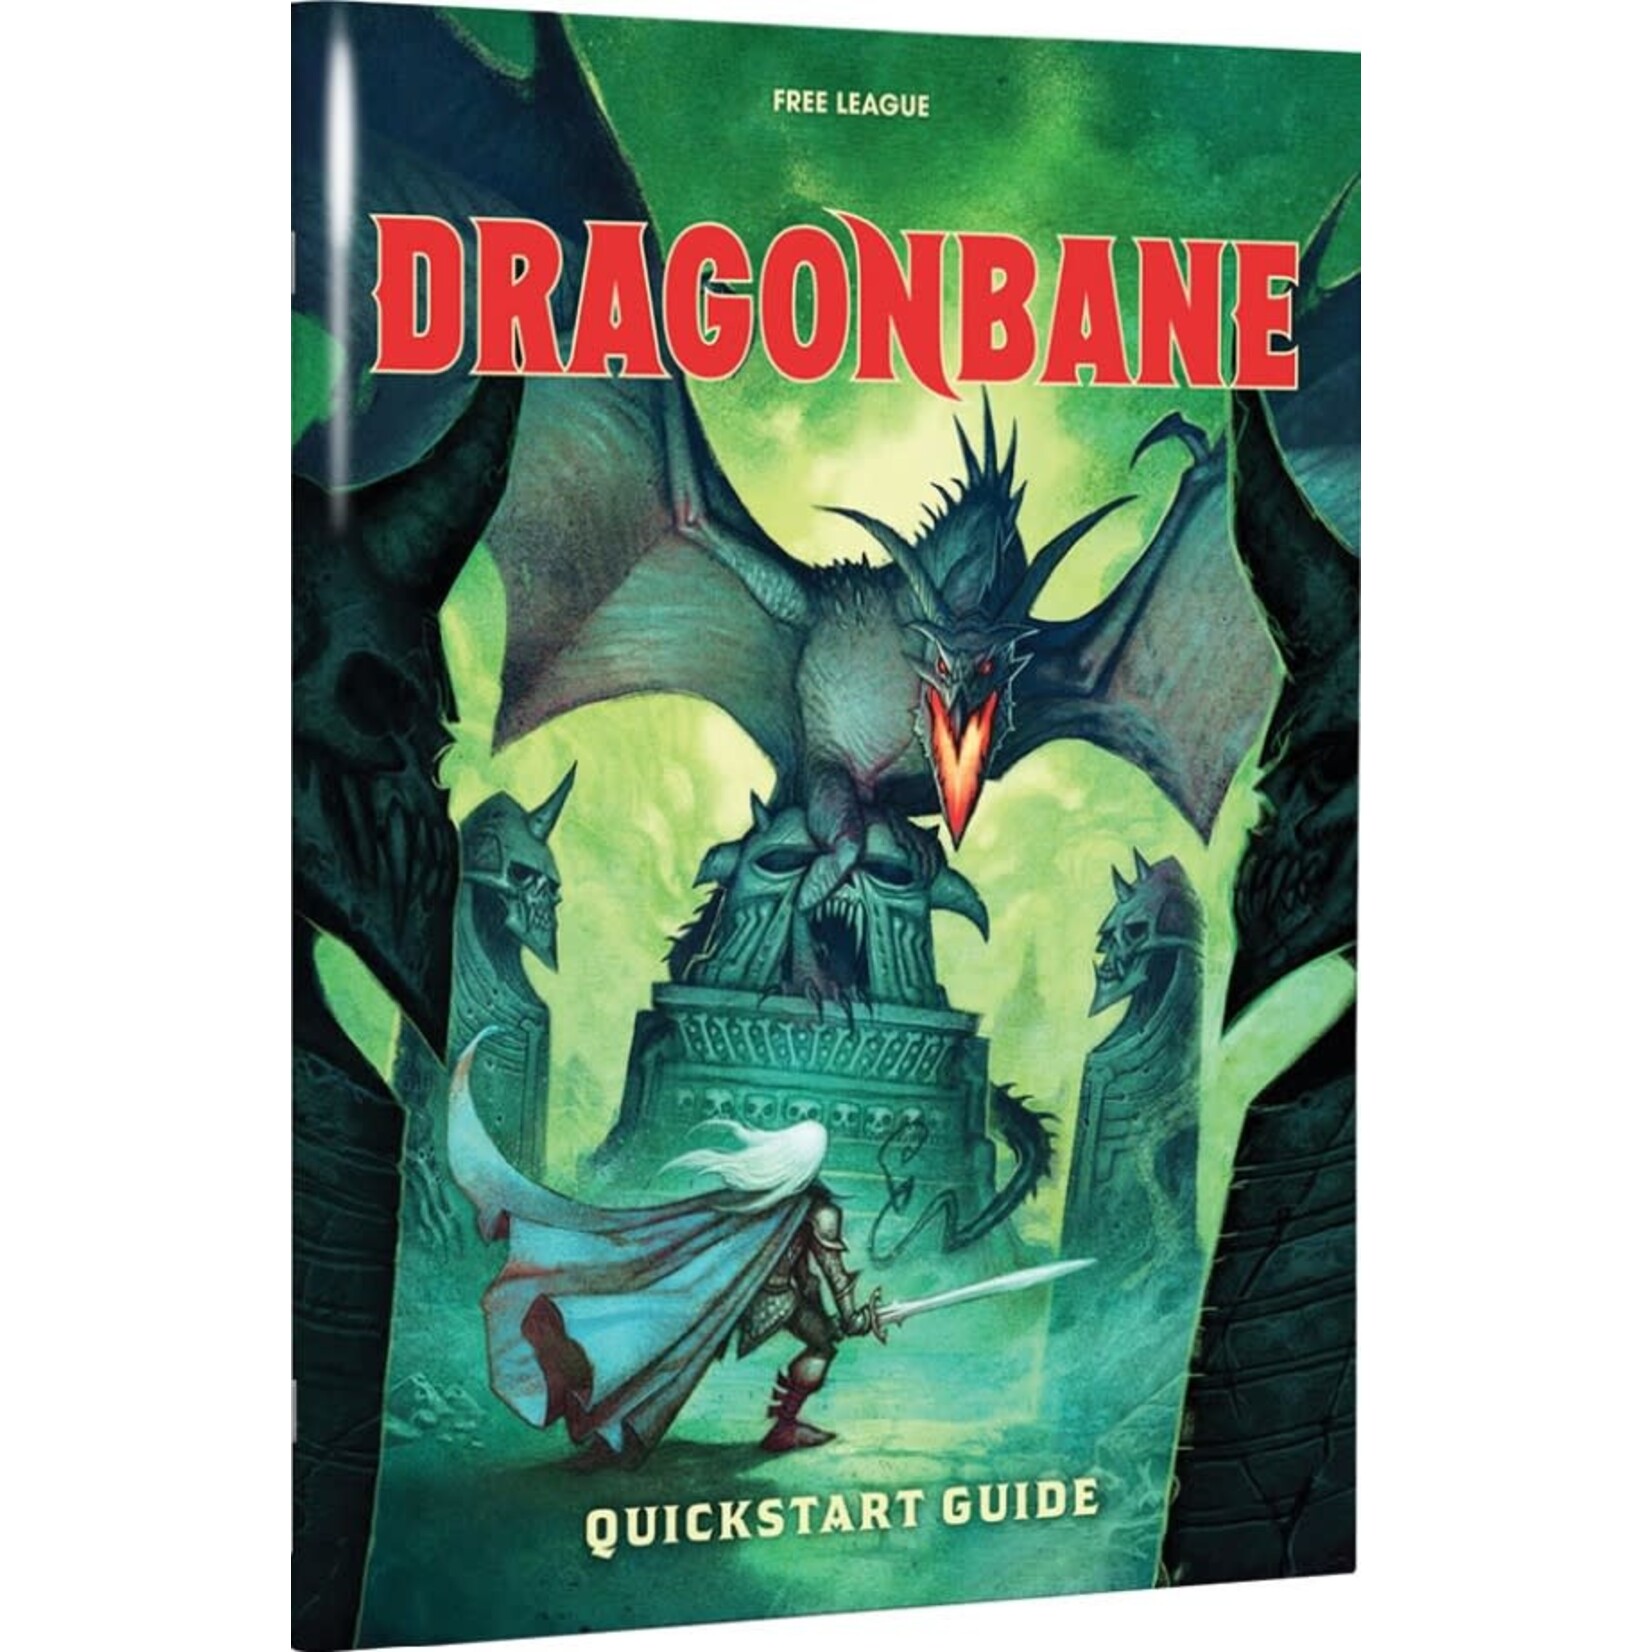 Free League Publishing Dragonbane: Quickstart Guide